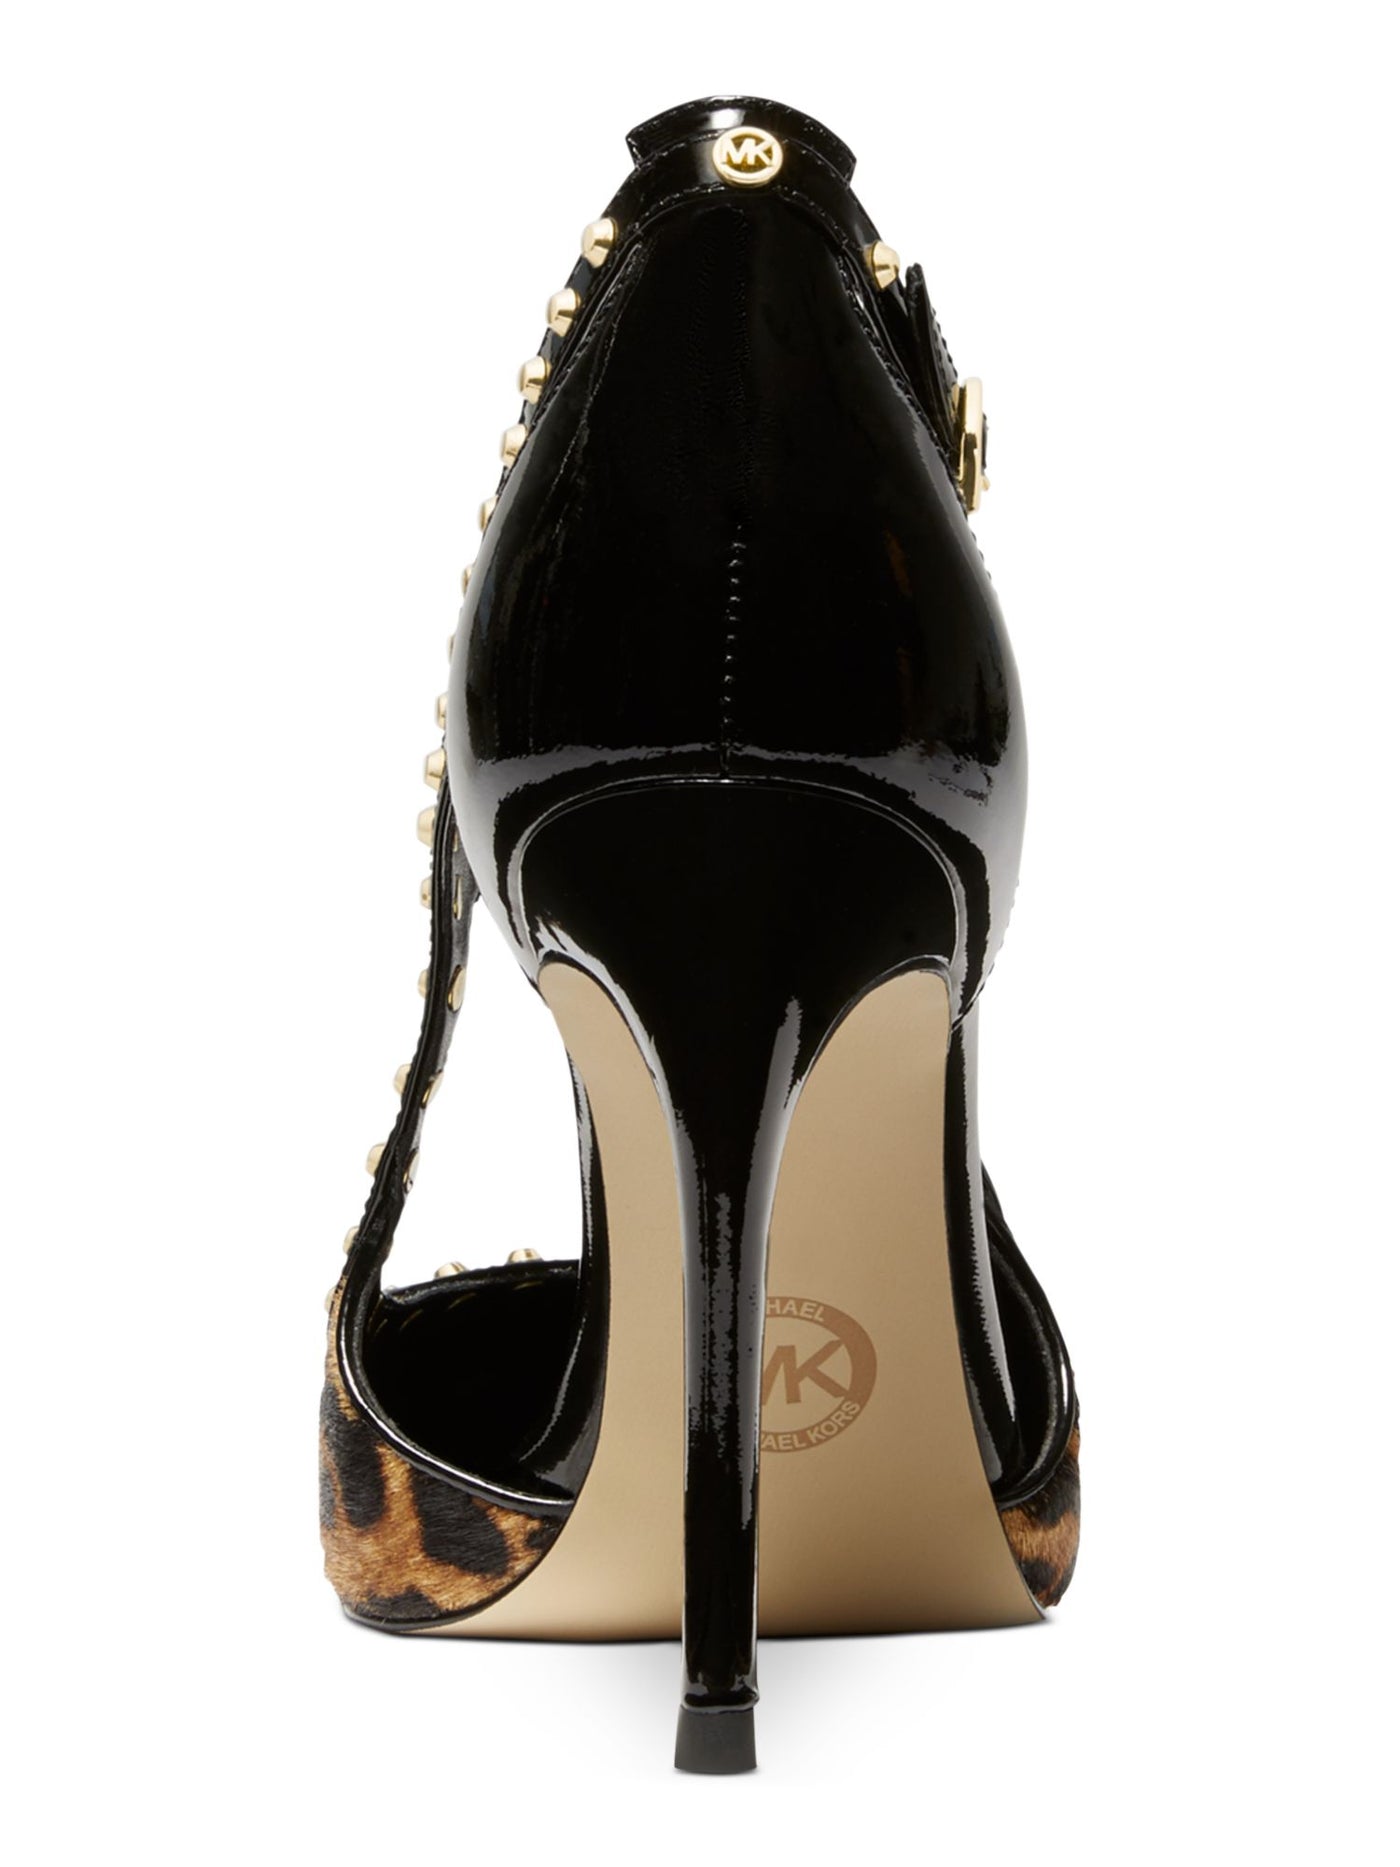 MICHAEL KORS Womens Black Leopard Print Studded Logo Ava Pointed Toe Stiletto Buckle Leather Dress Pumps Shoes 8.5 M